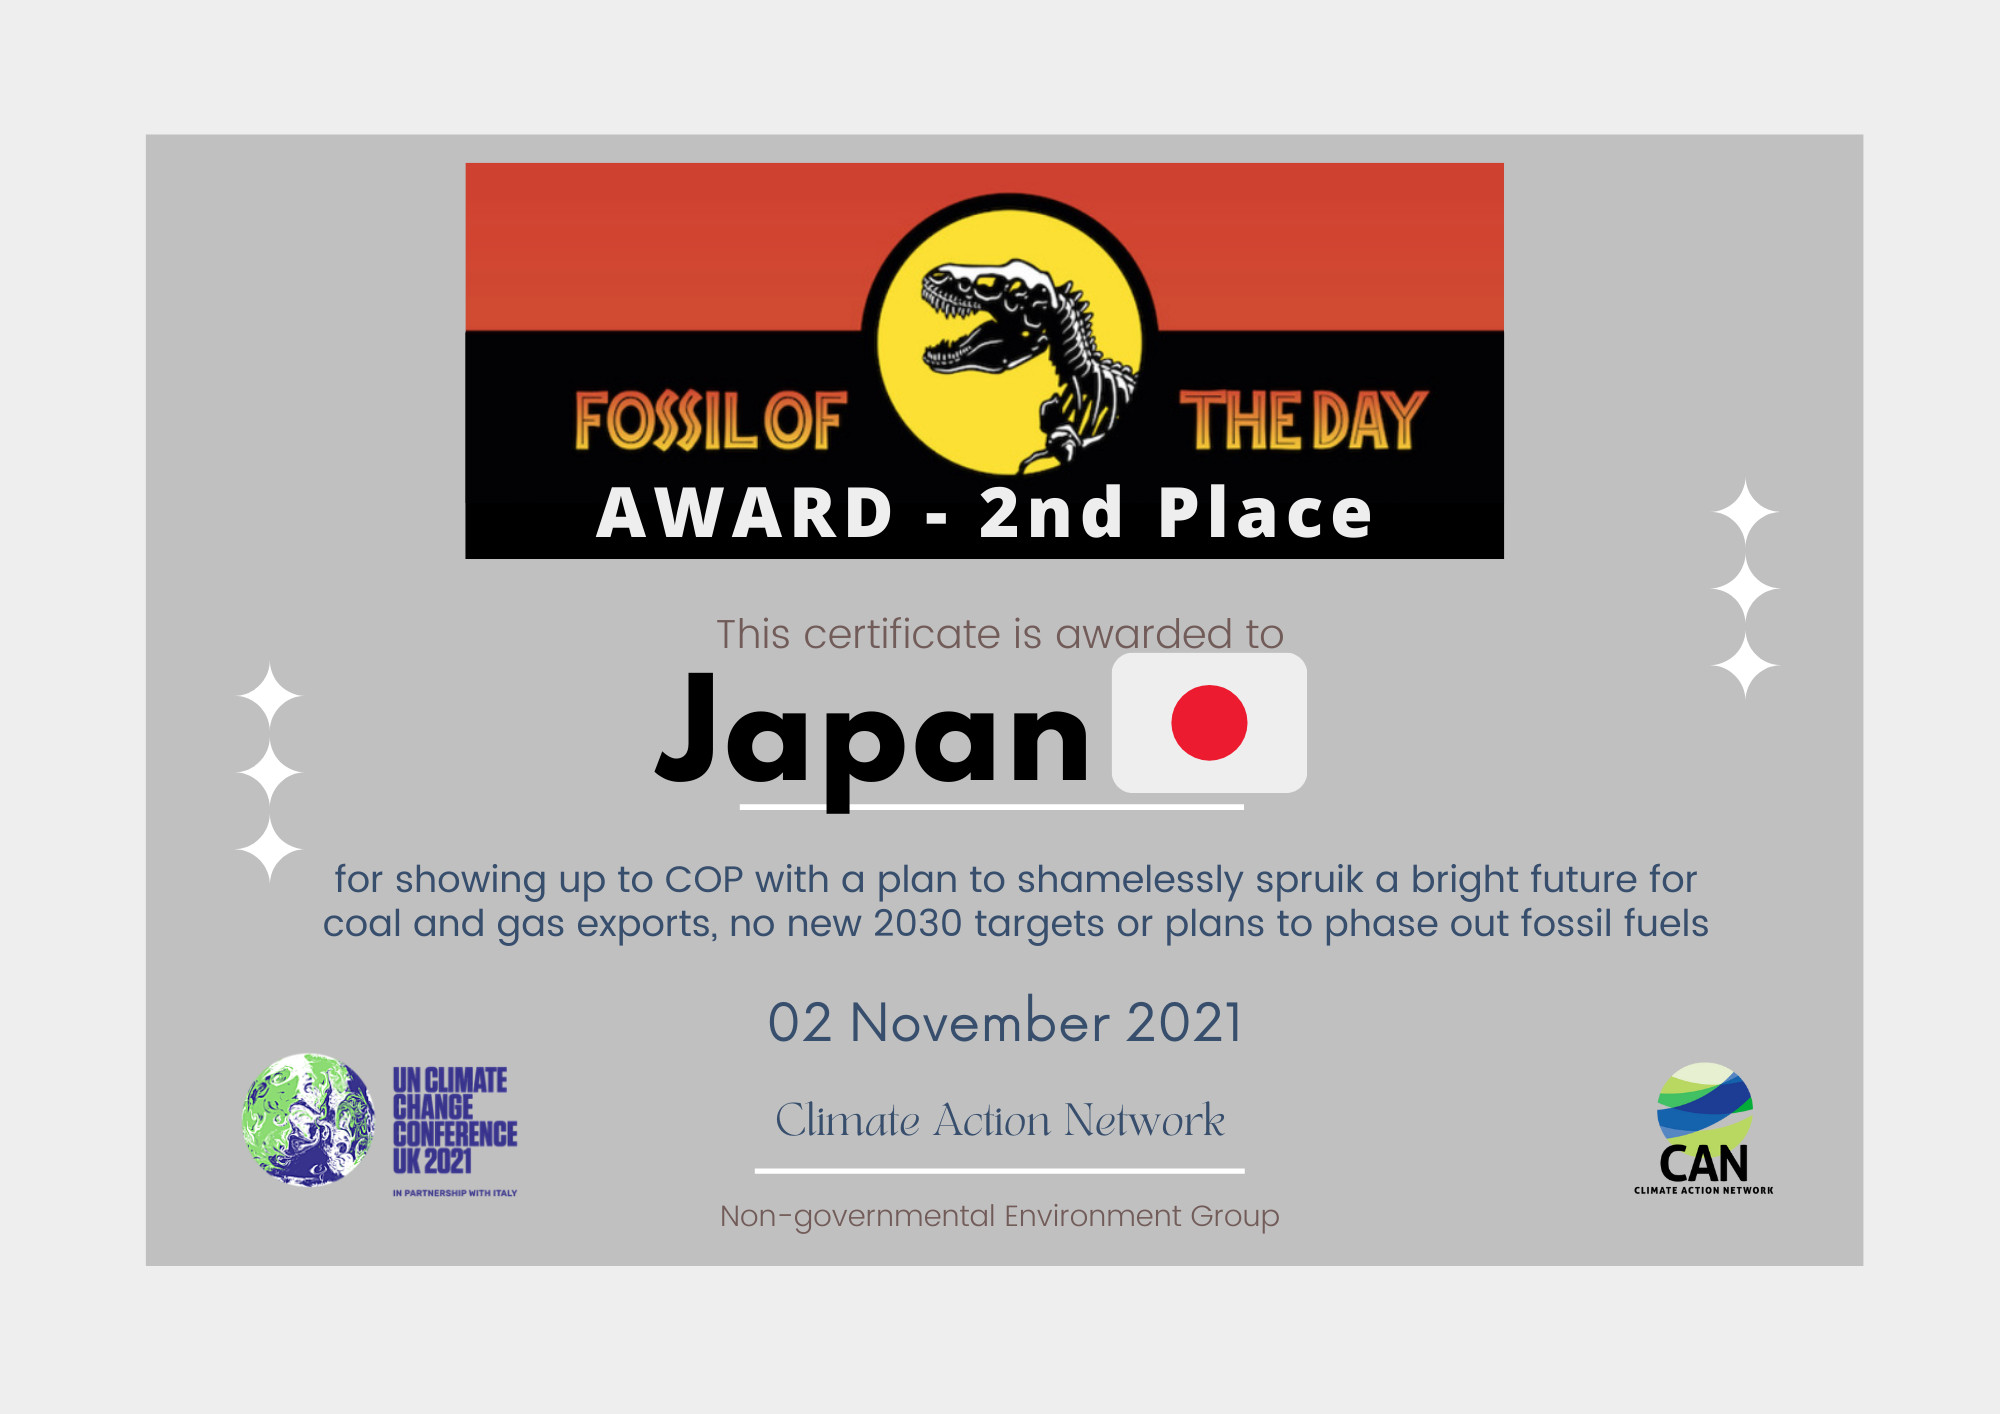 【News】Prime Minister Kishida’s COP26 speech wins Japan “Fossil of the Day” award